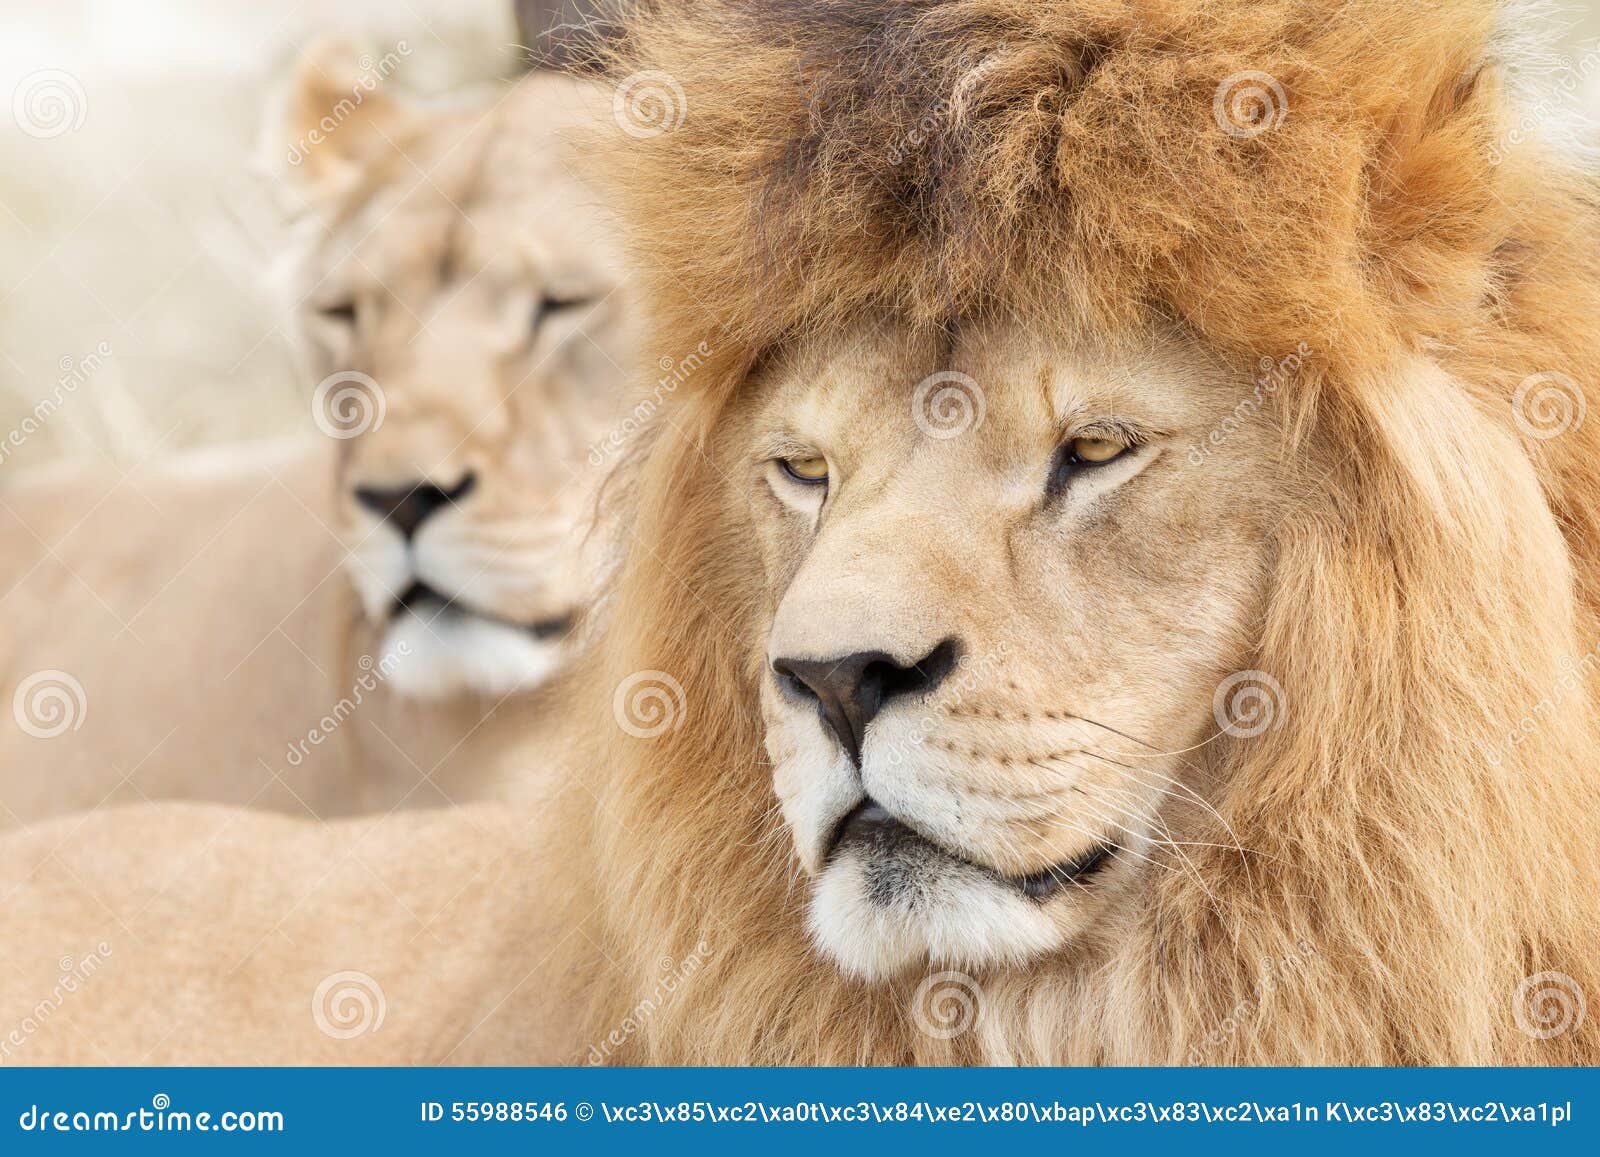 Top 37+ imagen leones hermosos